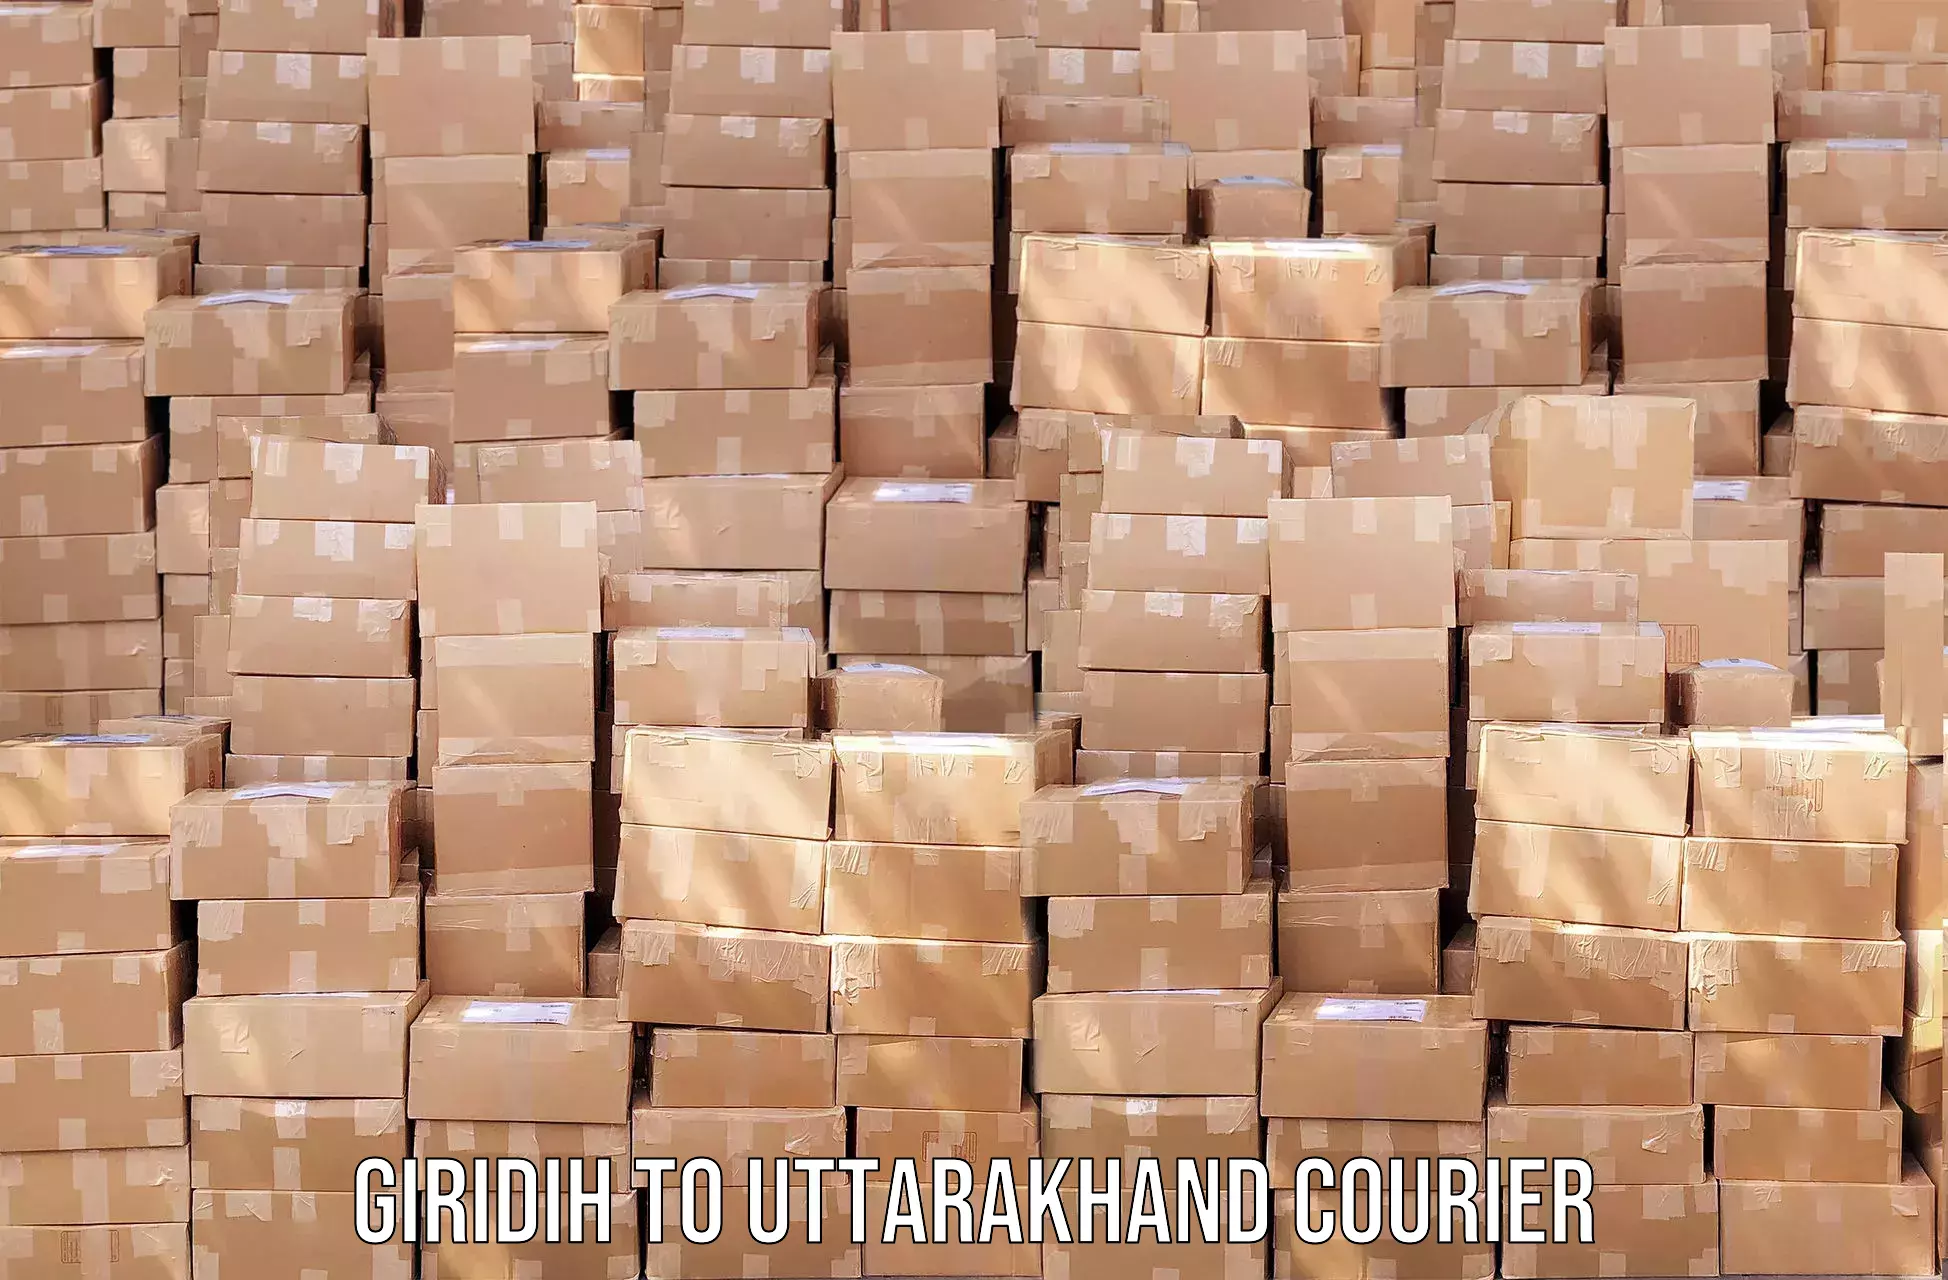 Global courier networks Giridih to Gopeshwar